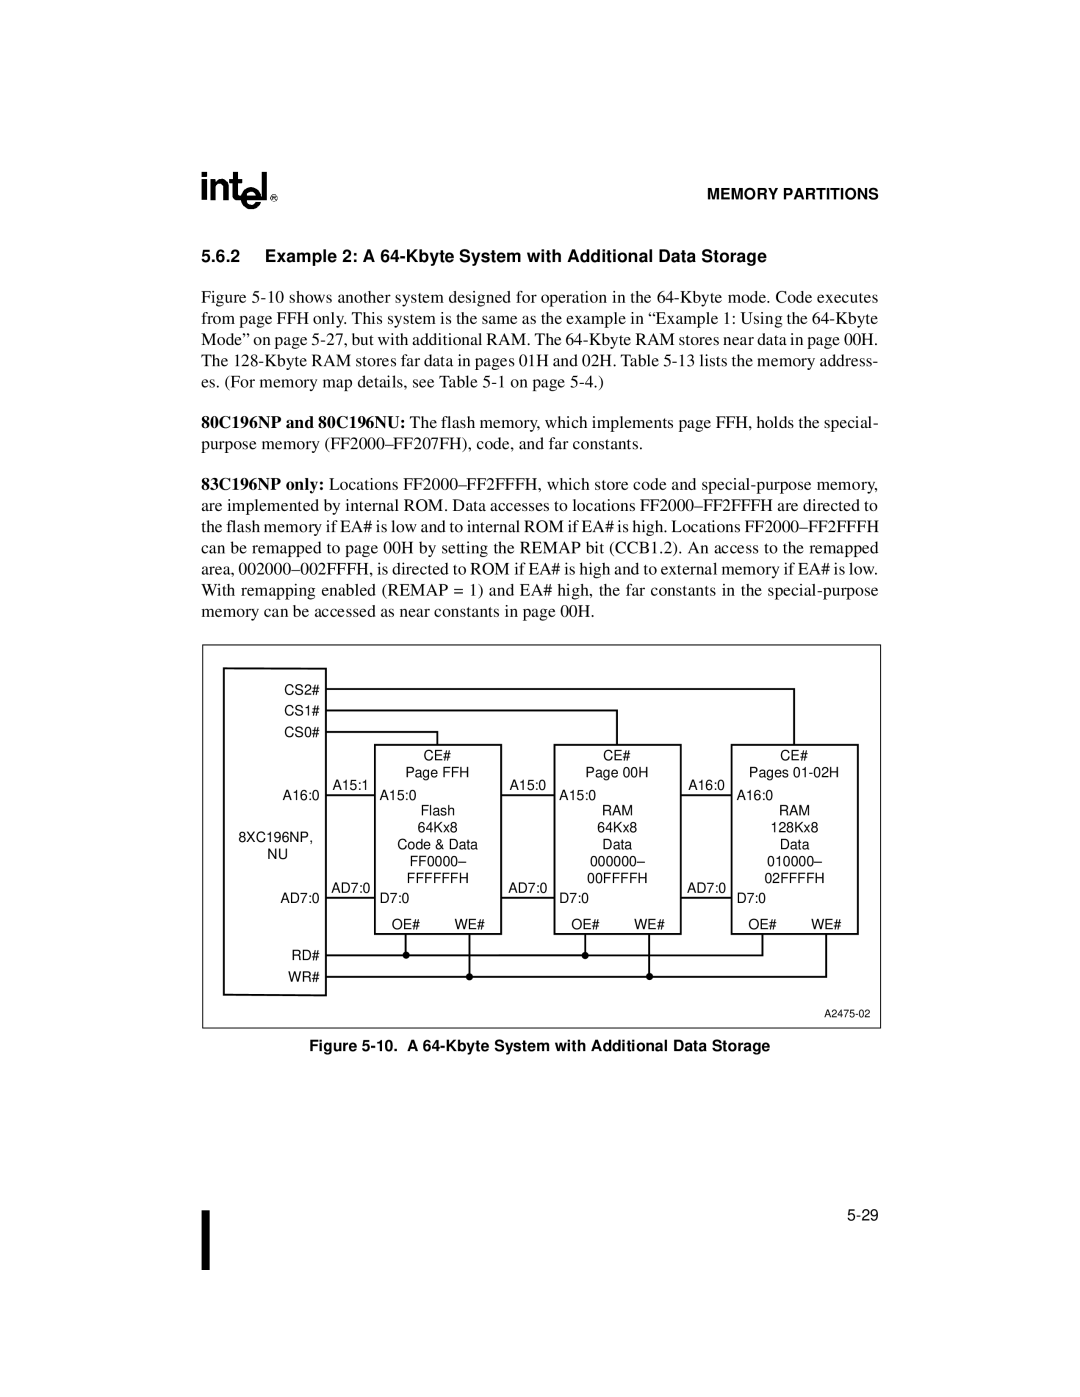 Intel 80C196NU manual Example 2 a 64-Kbyte System with Additional Data Storage, Rd# Wr# Ce#, Ffffffh D70 OE# WE#, 02FFFFH 